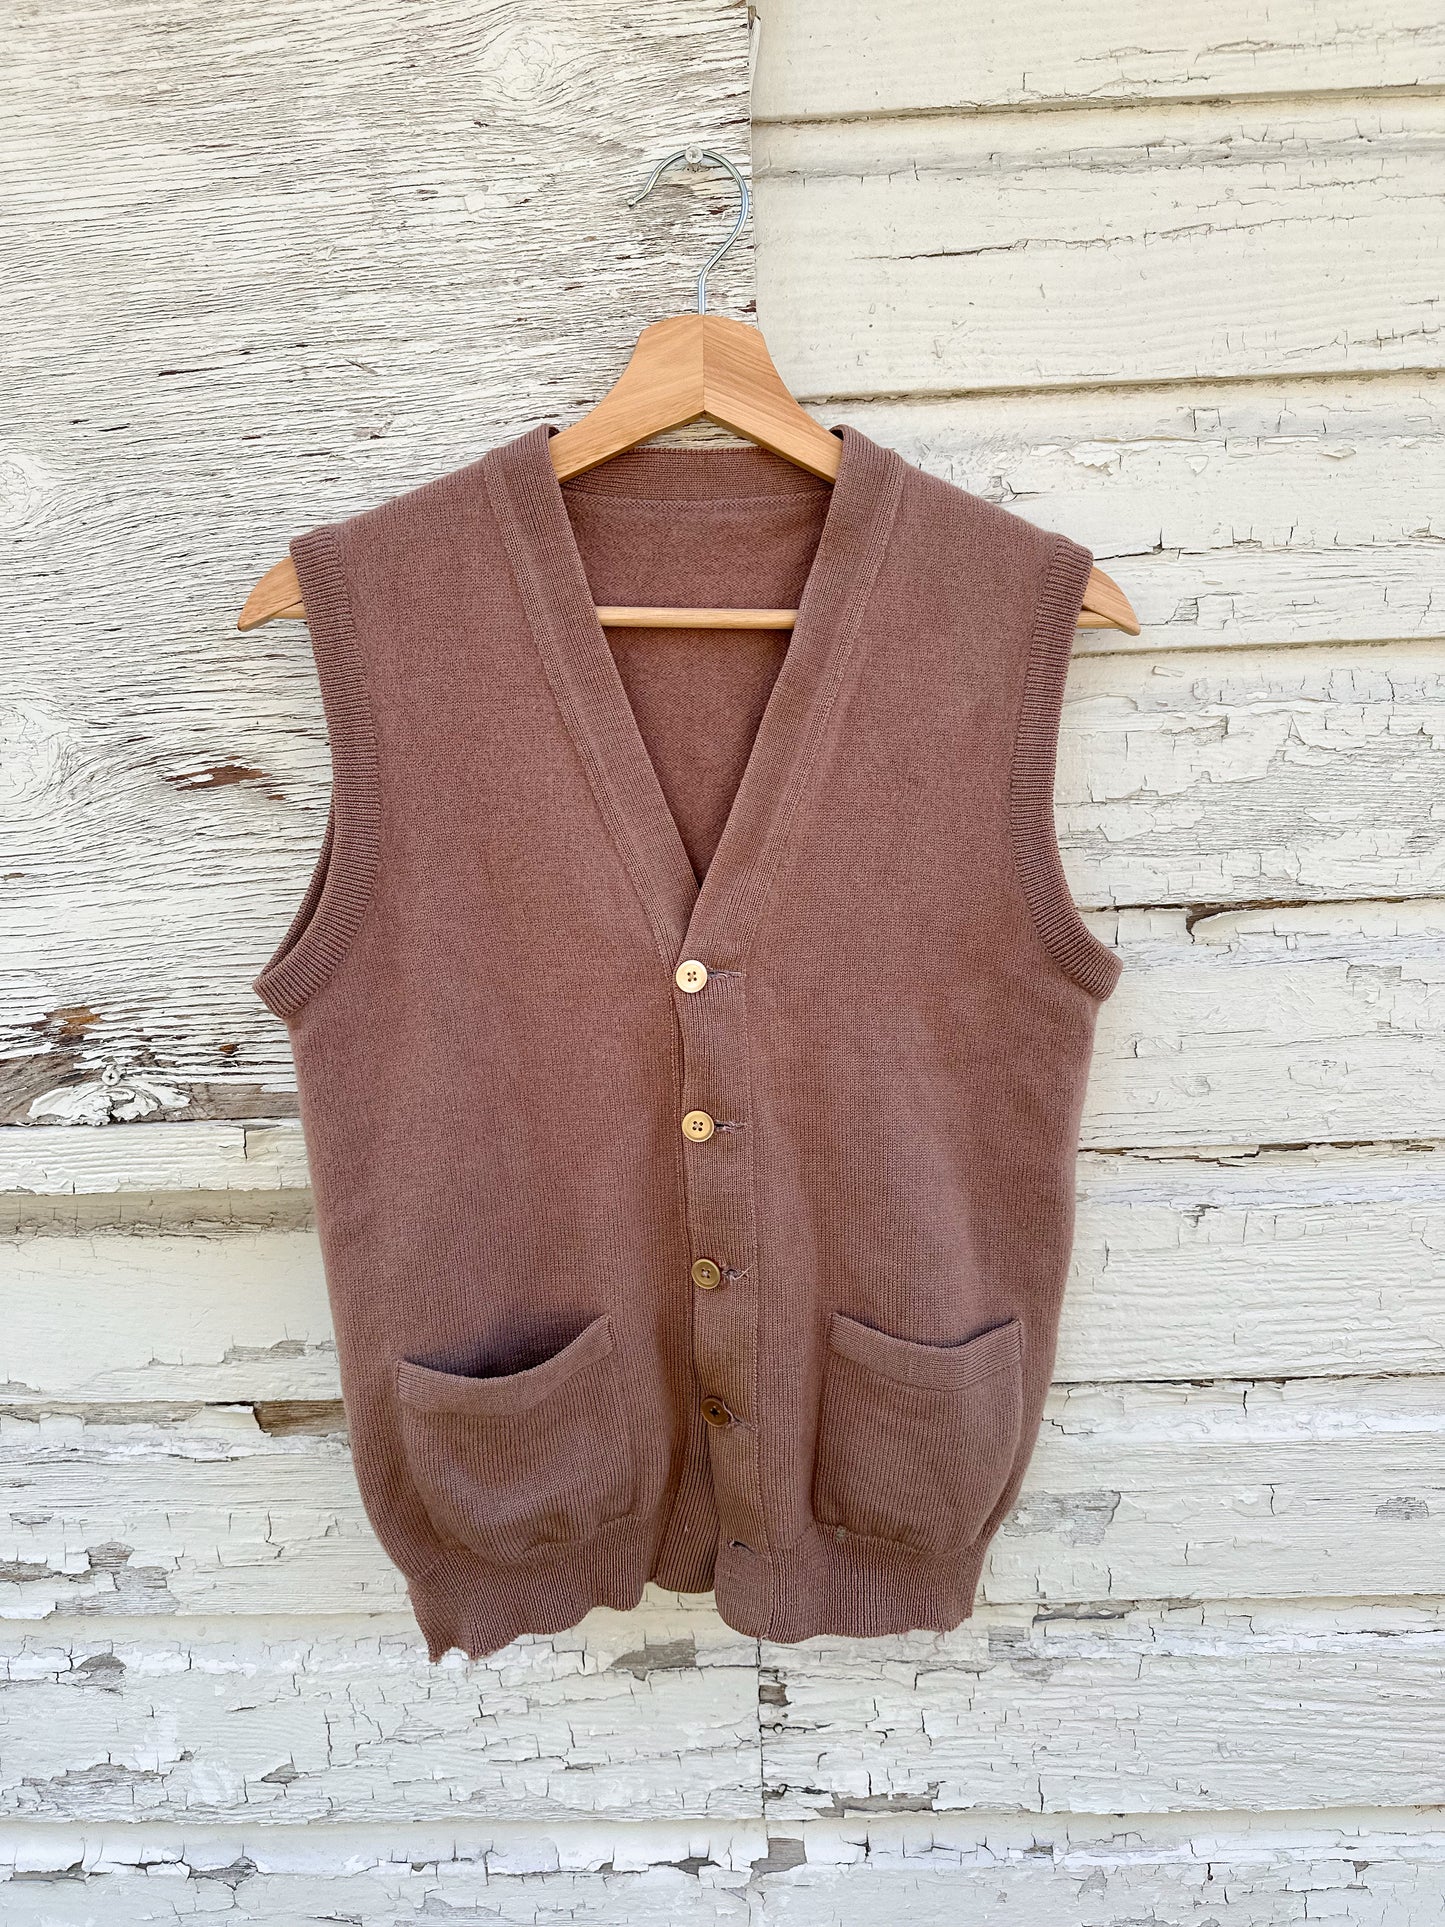 vintage brown sweater vest